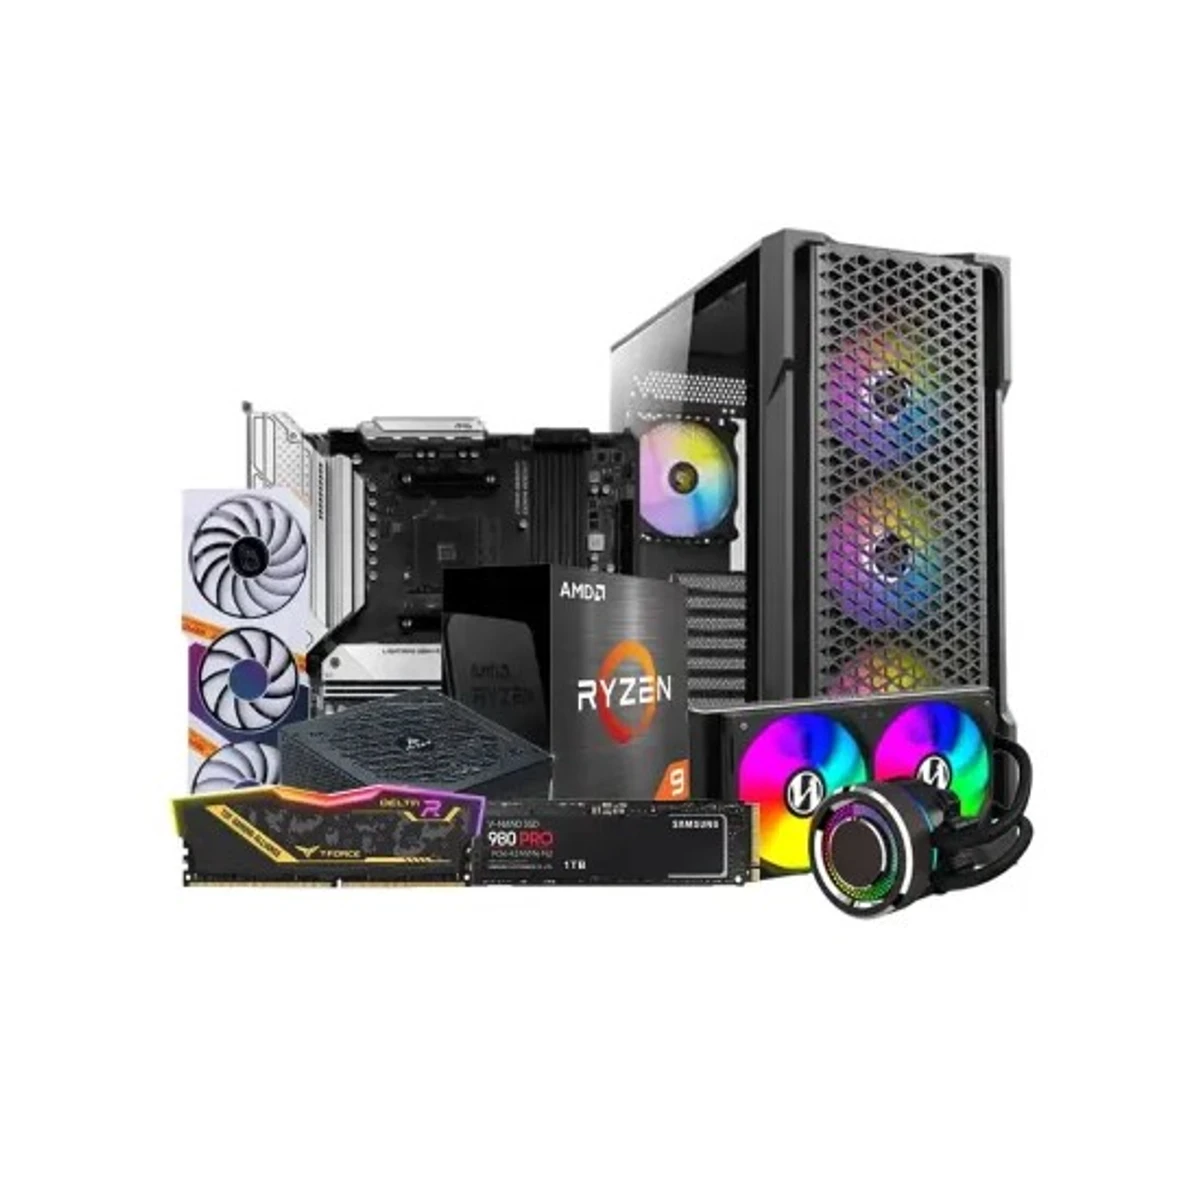 AMD Ryzen 9 5900X Gaming Desktop PC